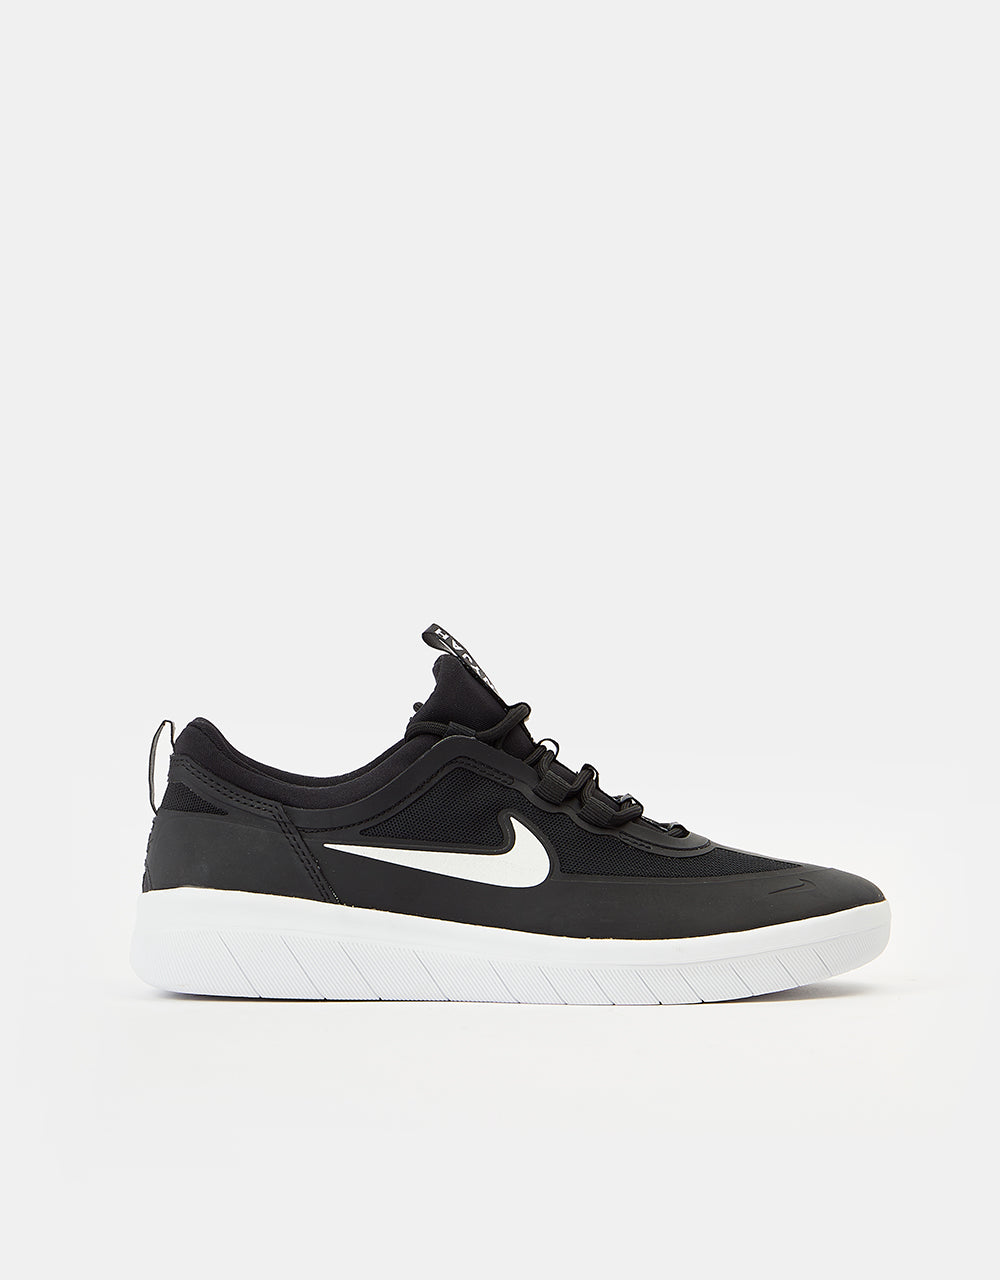 Nike SB Nyjah Free 2 Skate Shoes - Black/White-Black-Black